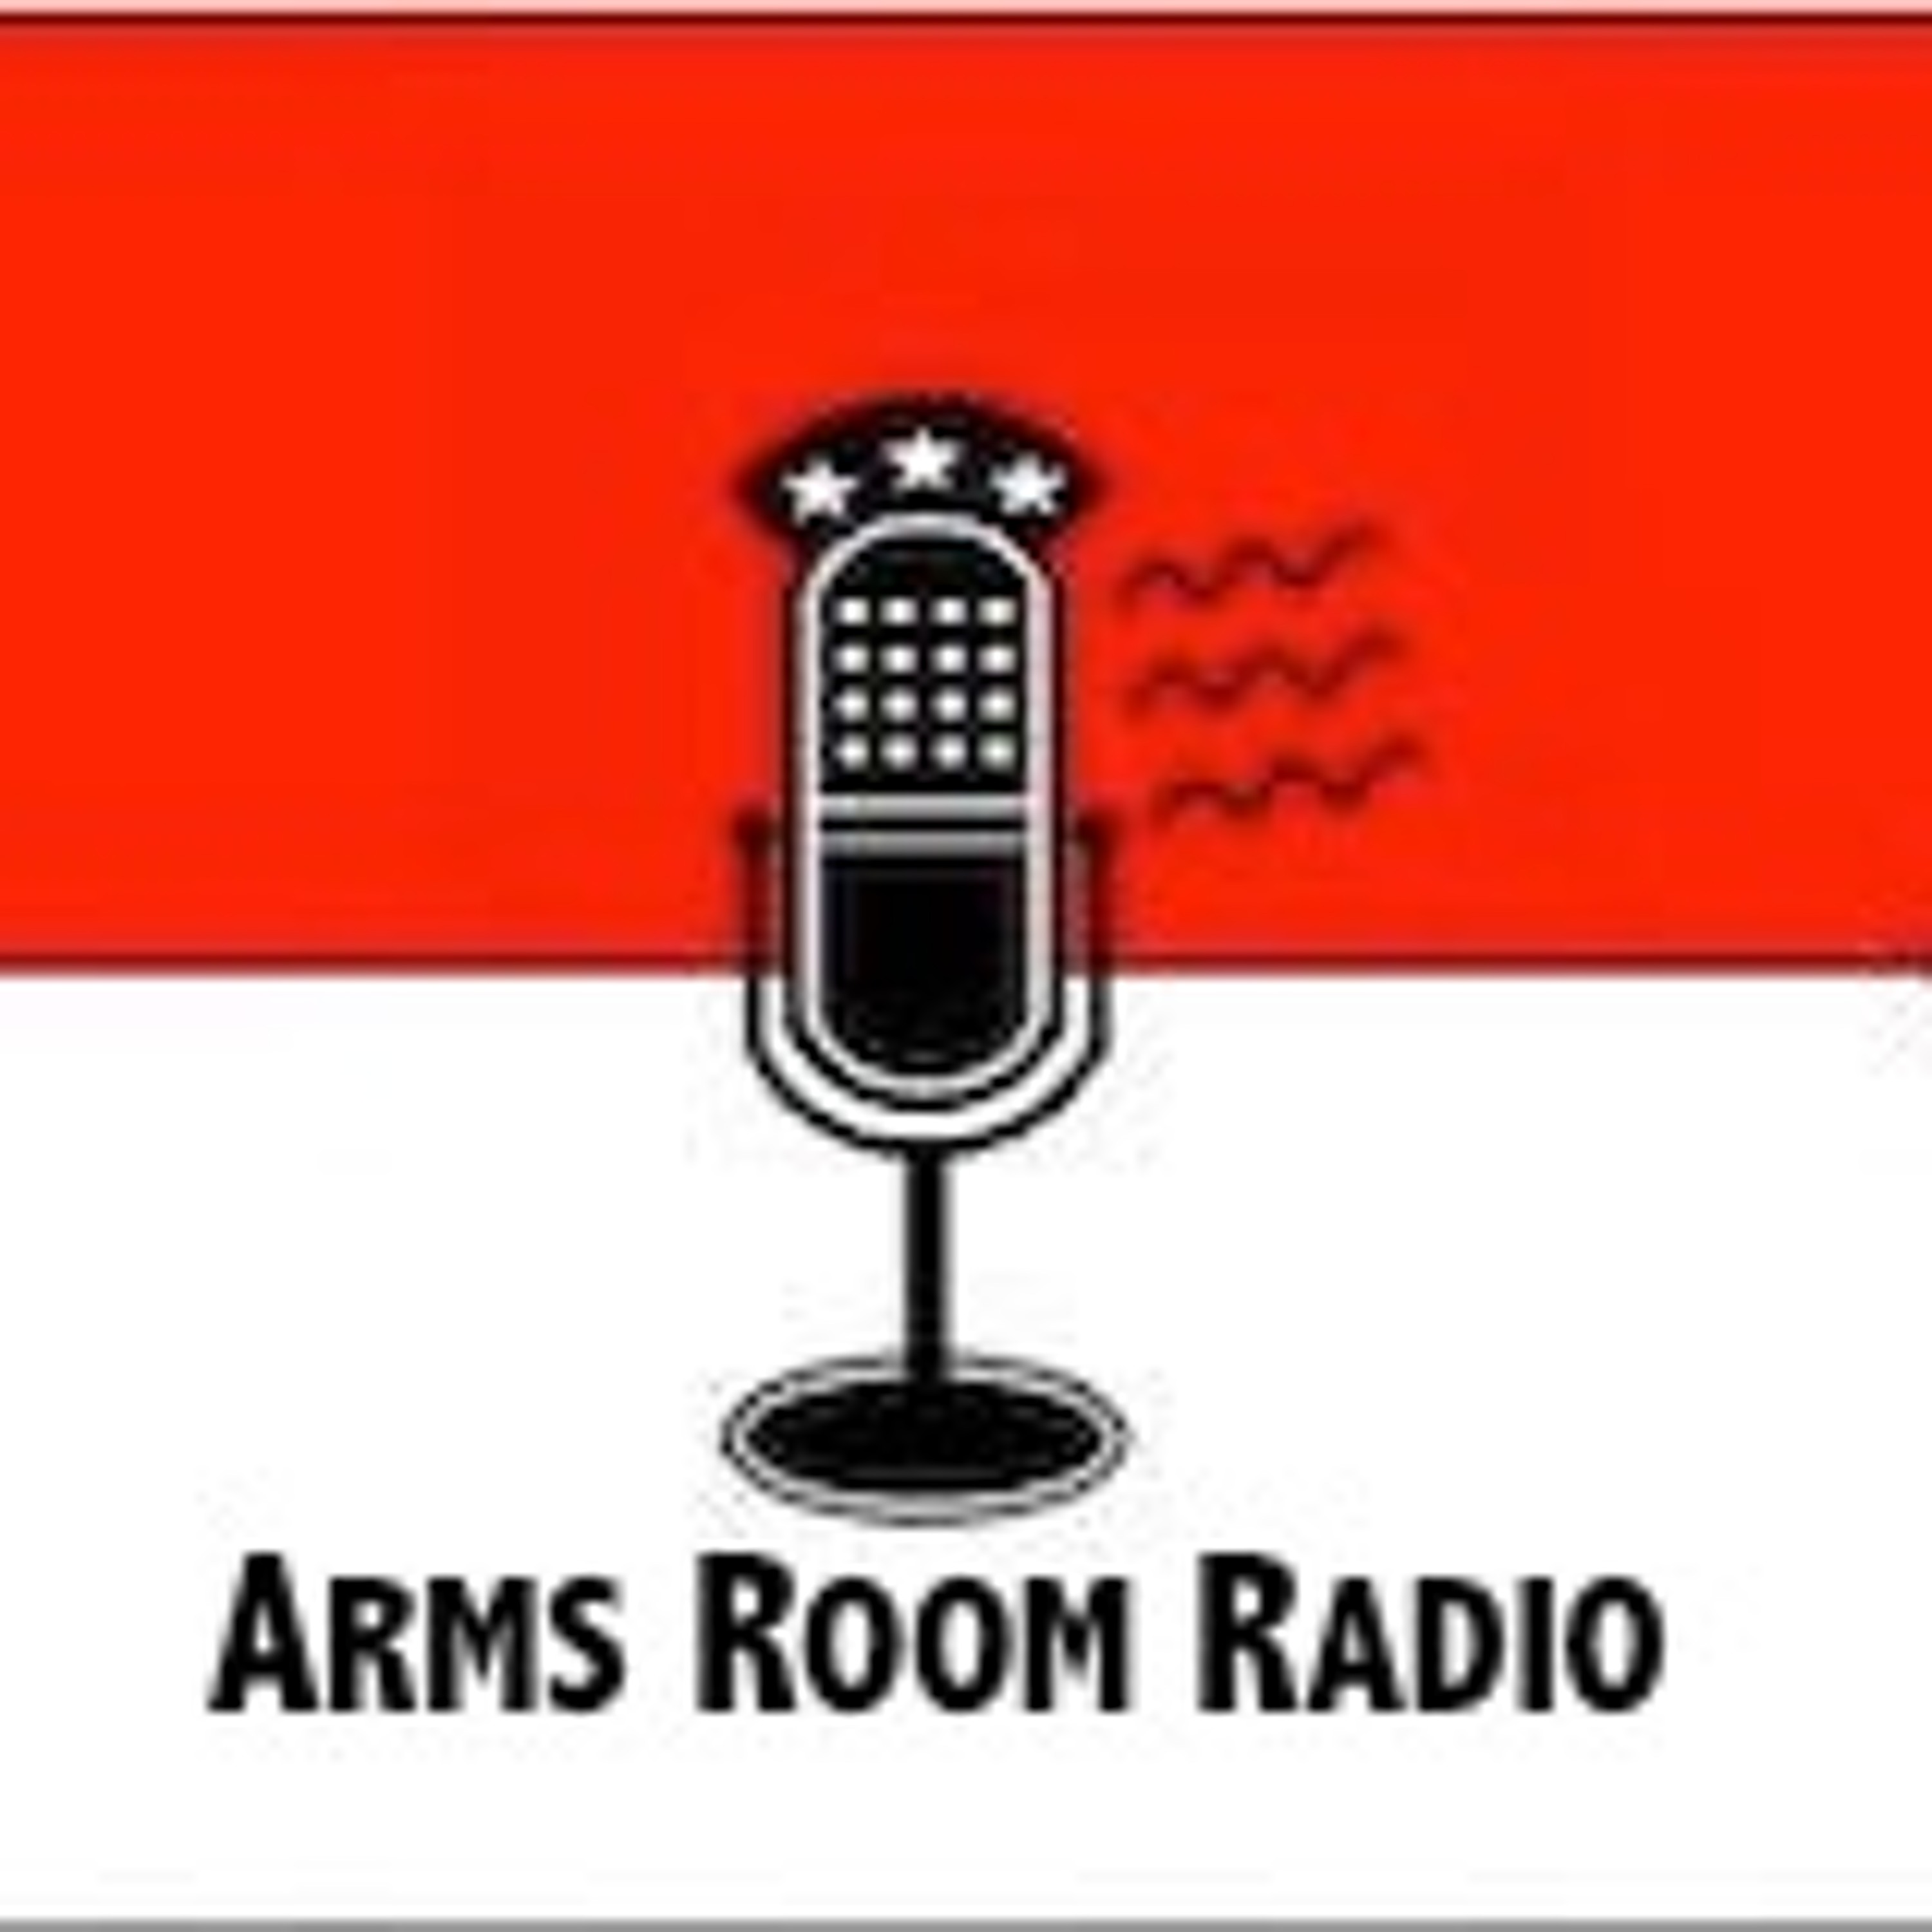 ArmsRoomRadio 07.13.19 NJ2AS, NYC and TSA